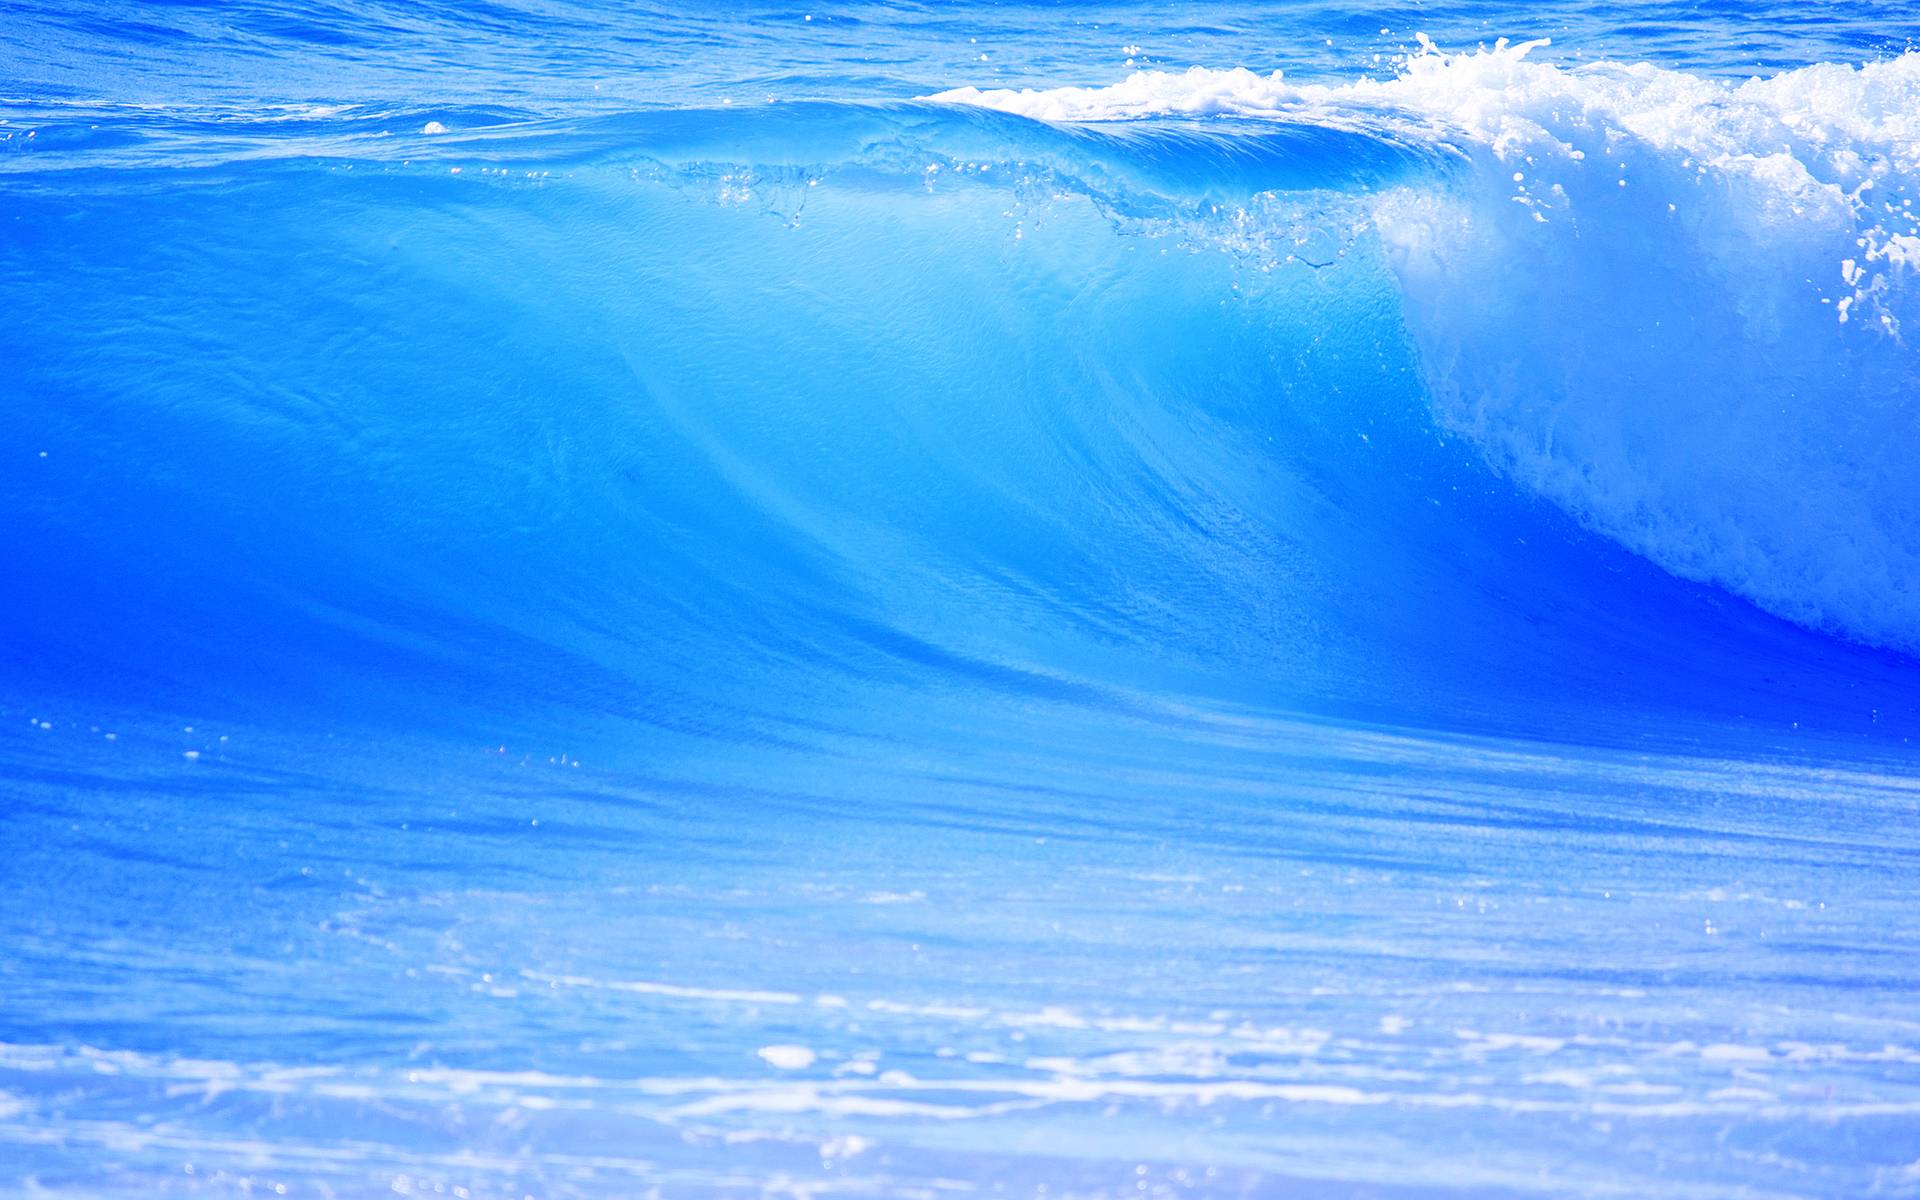 Ocean Water Wallpaper Sea Waves Freshne 1920x1200PX Wallpaper